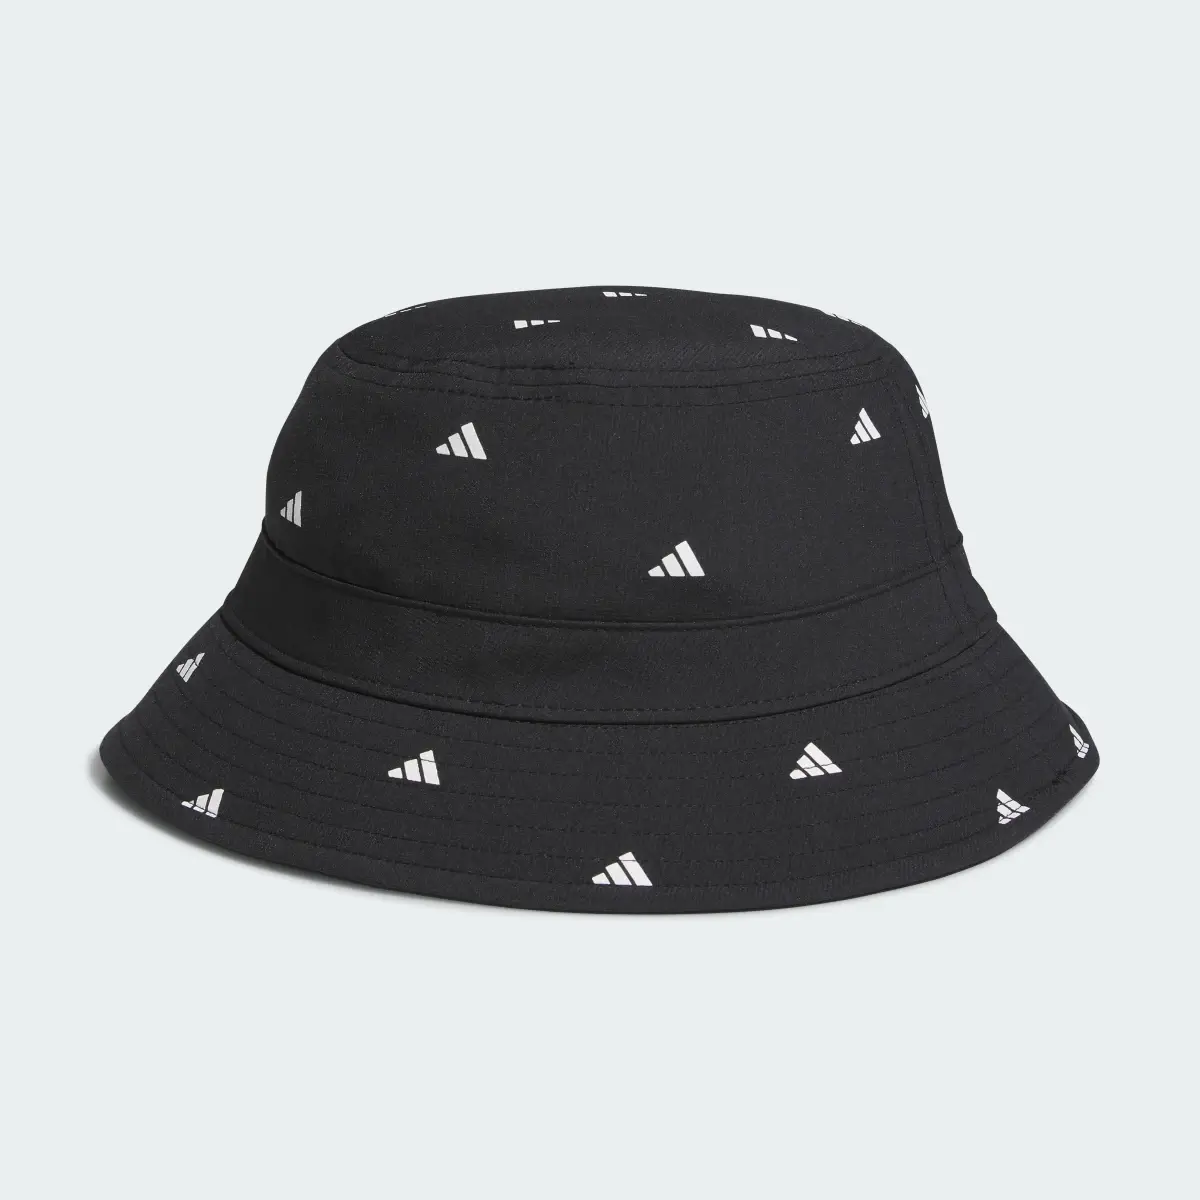 Adidas Women's Printed Bucket Hat. 3